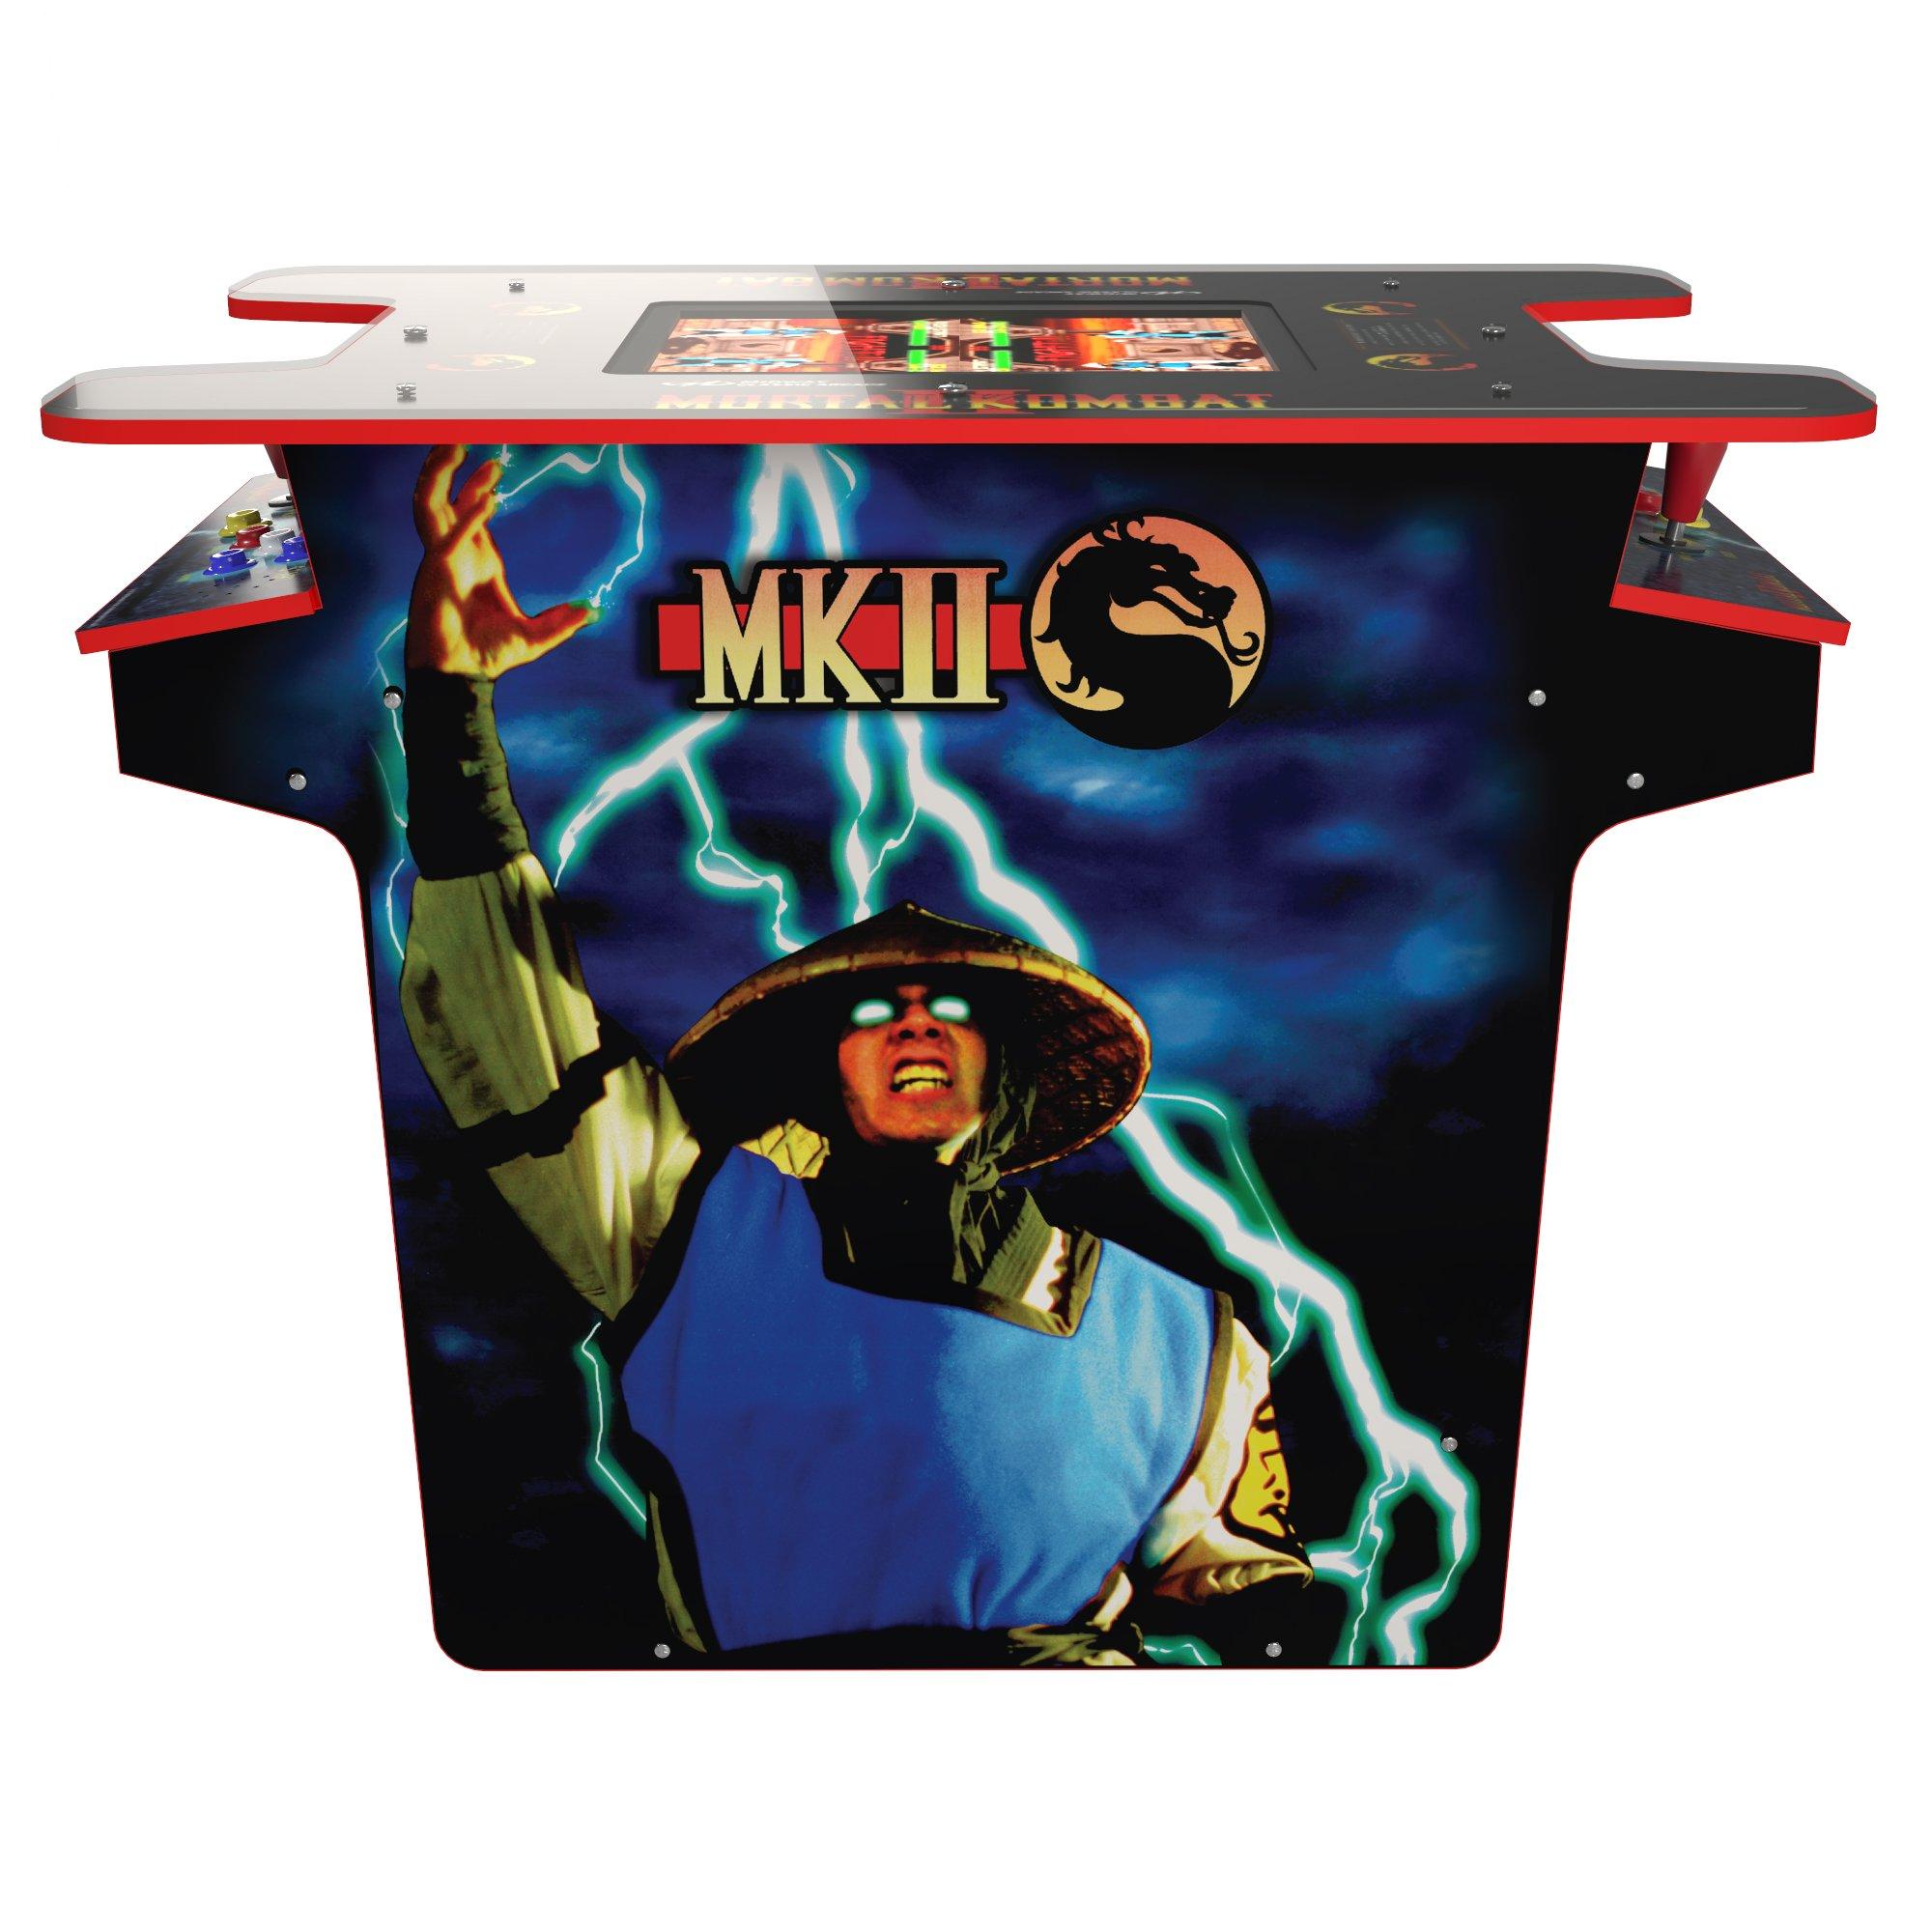 Aracde1Up Mortal Kombat Midway Gaming Table